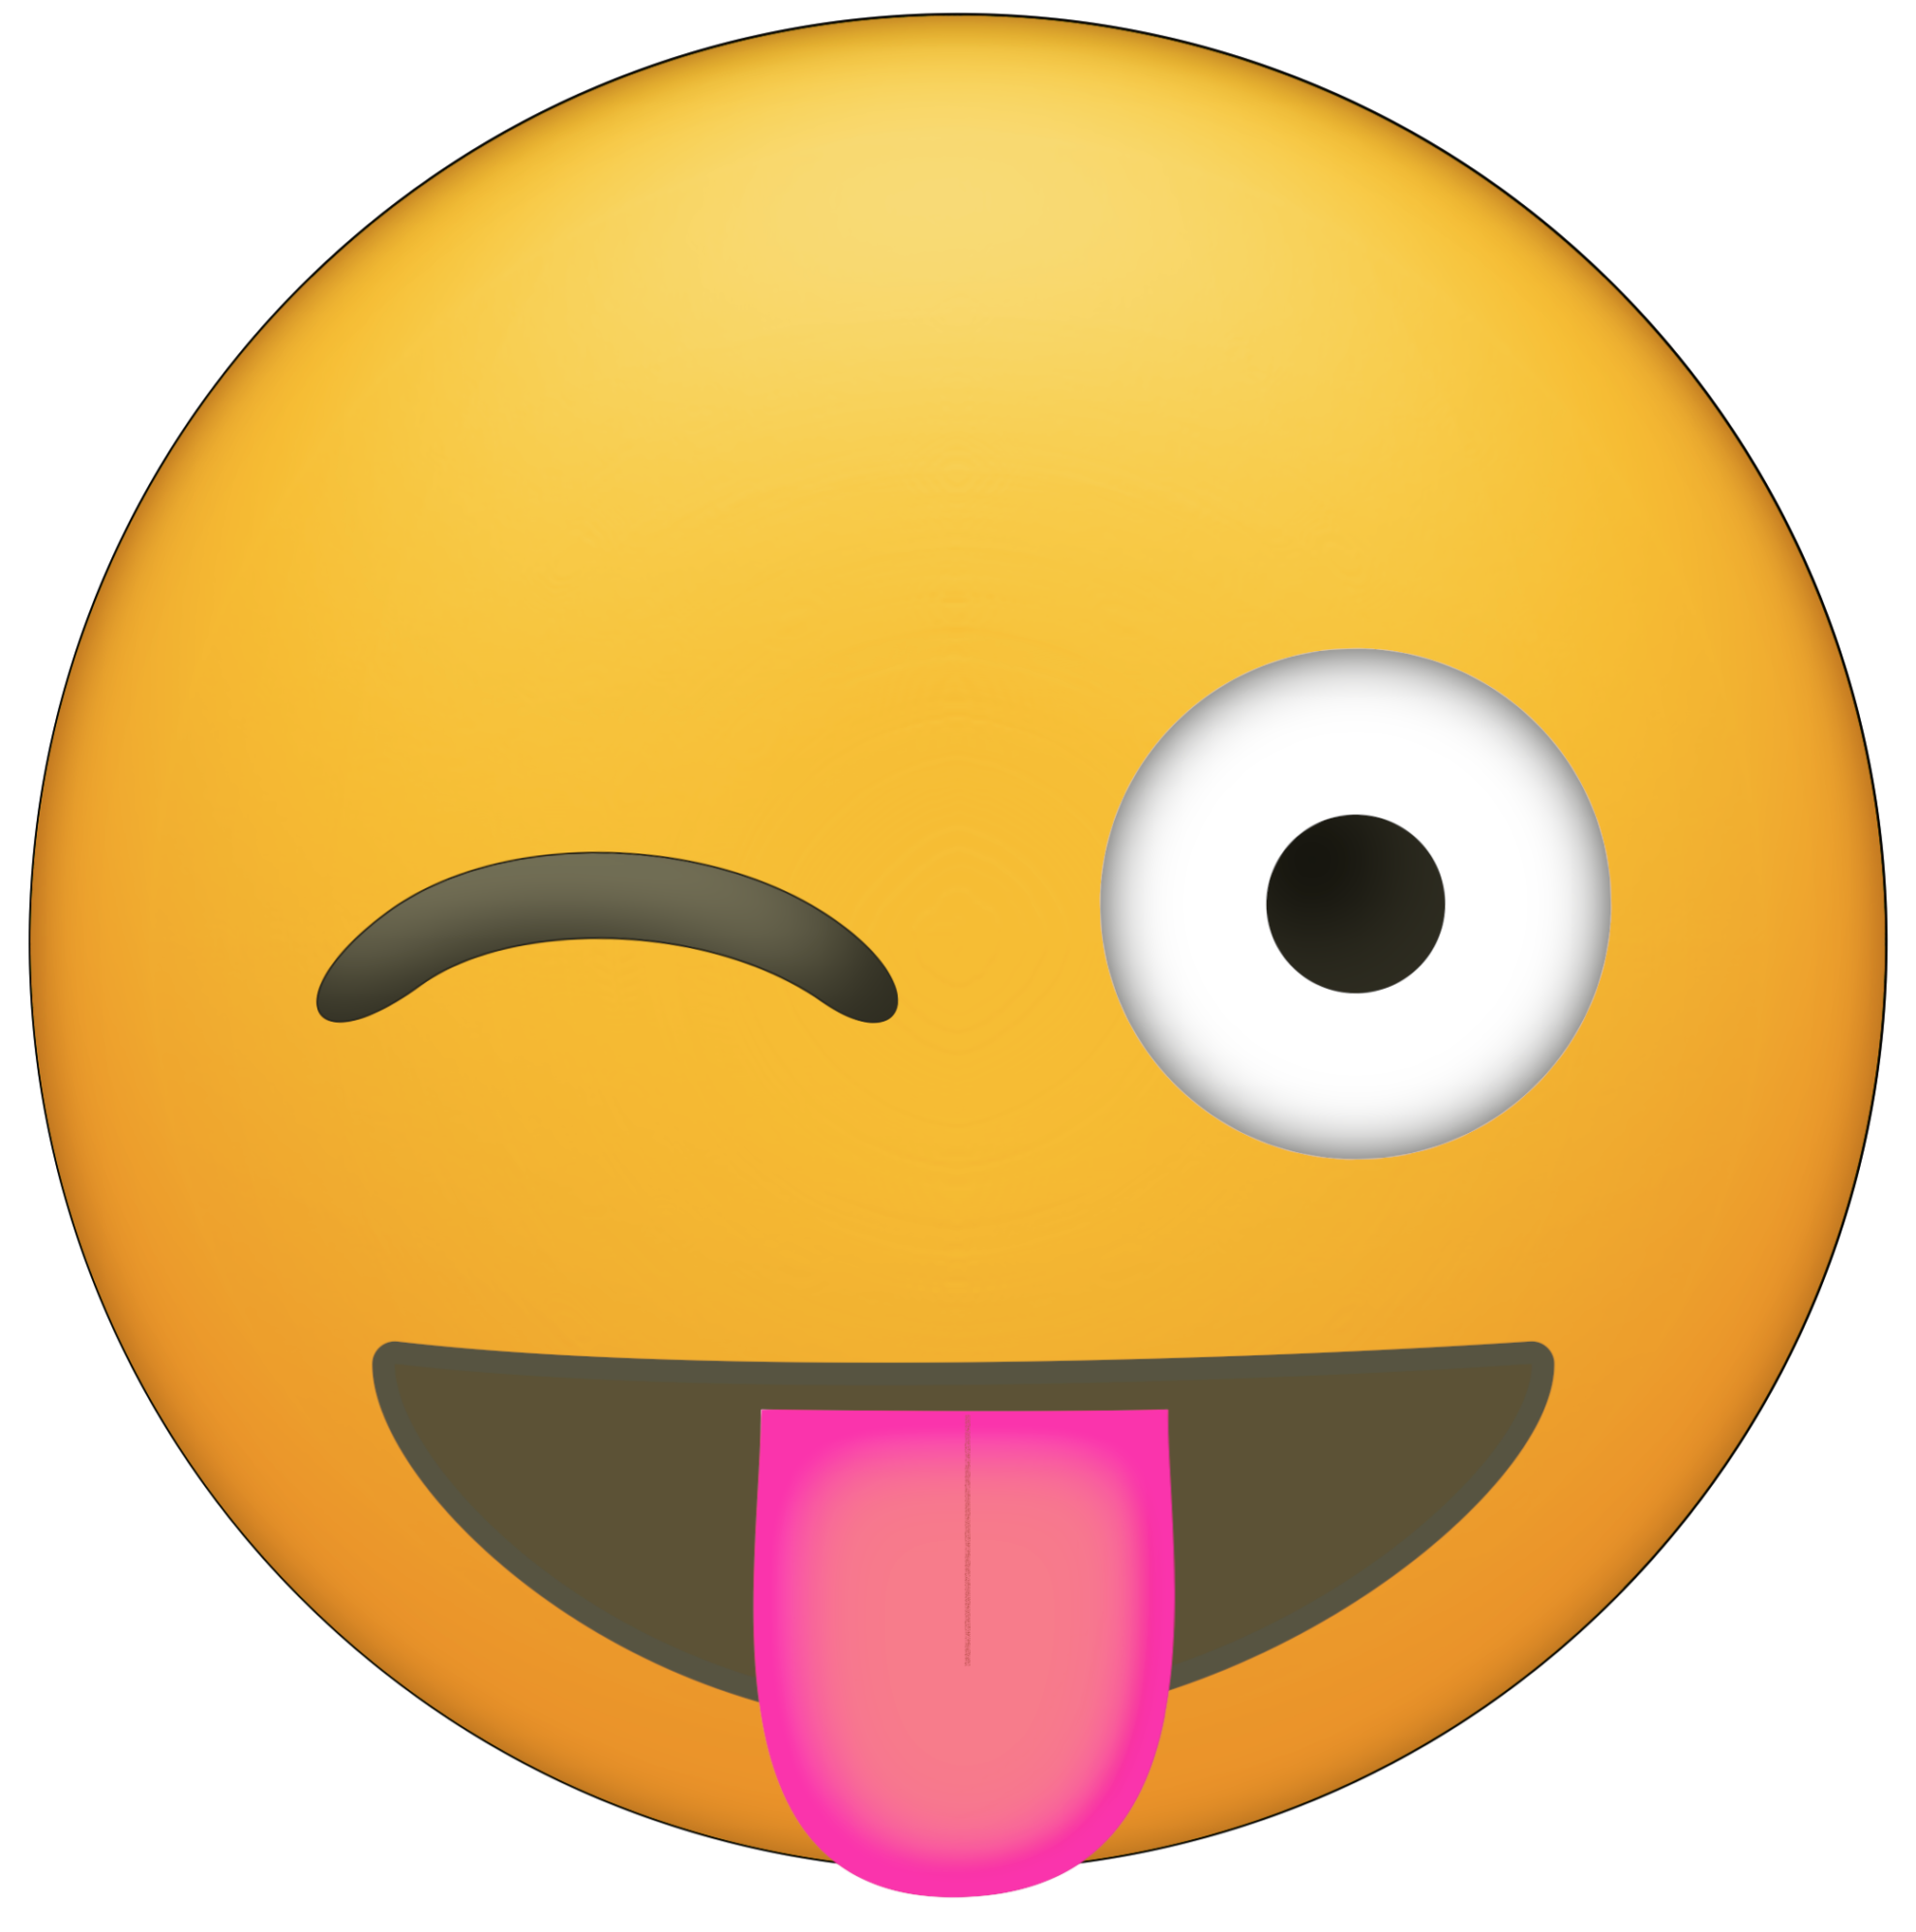 Click the following links to print the Emoji Faces Printable Free Emoji Pri...